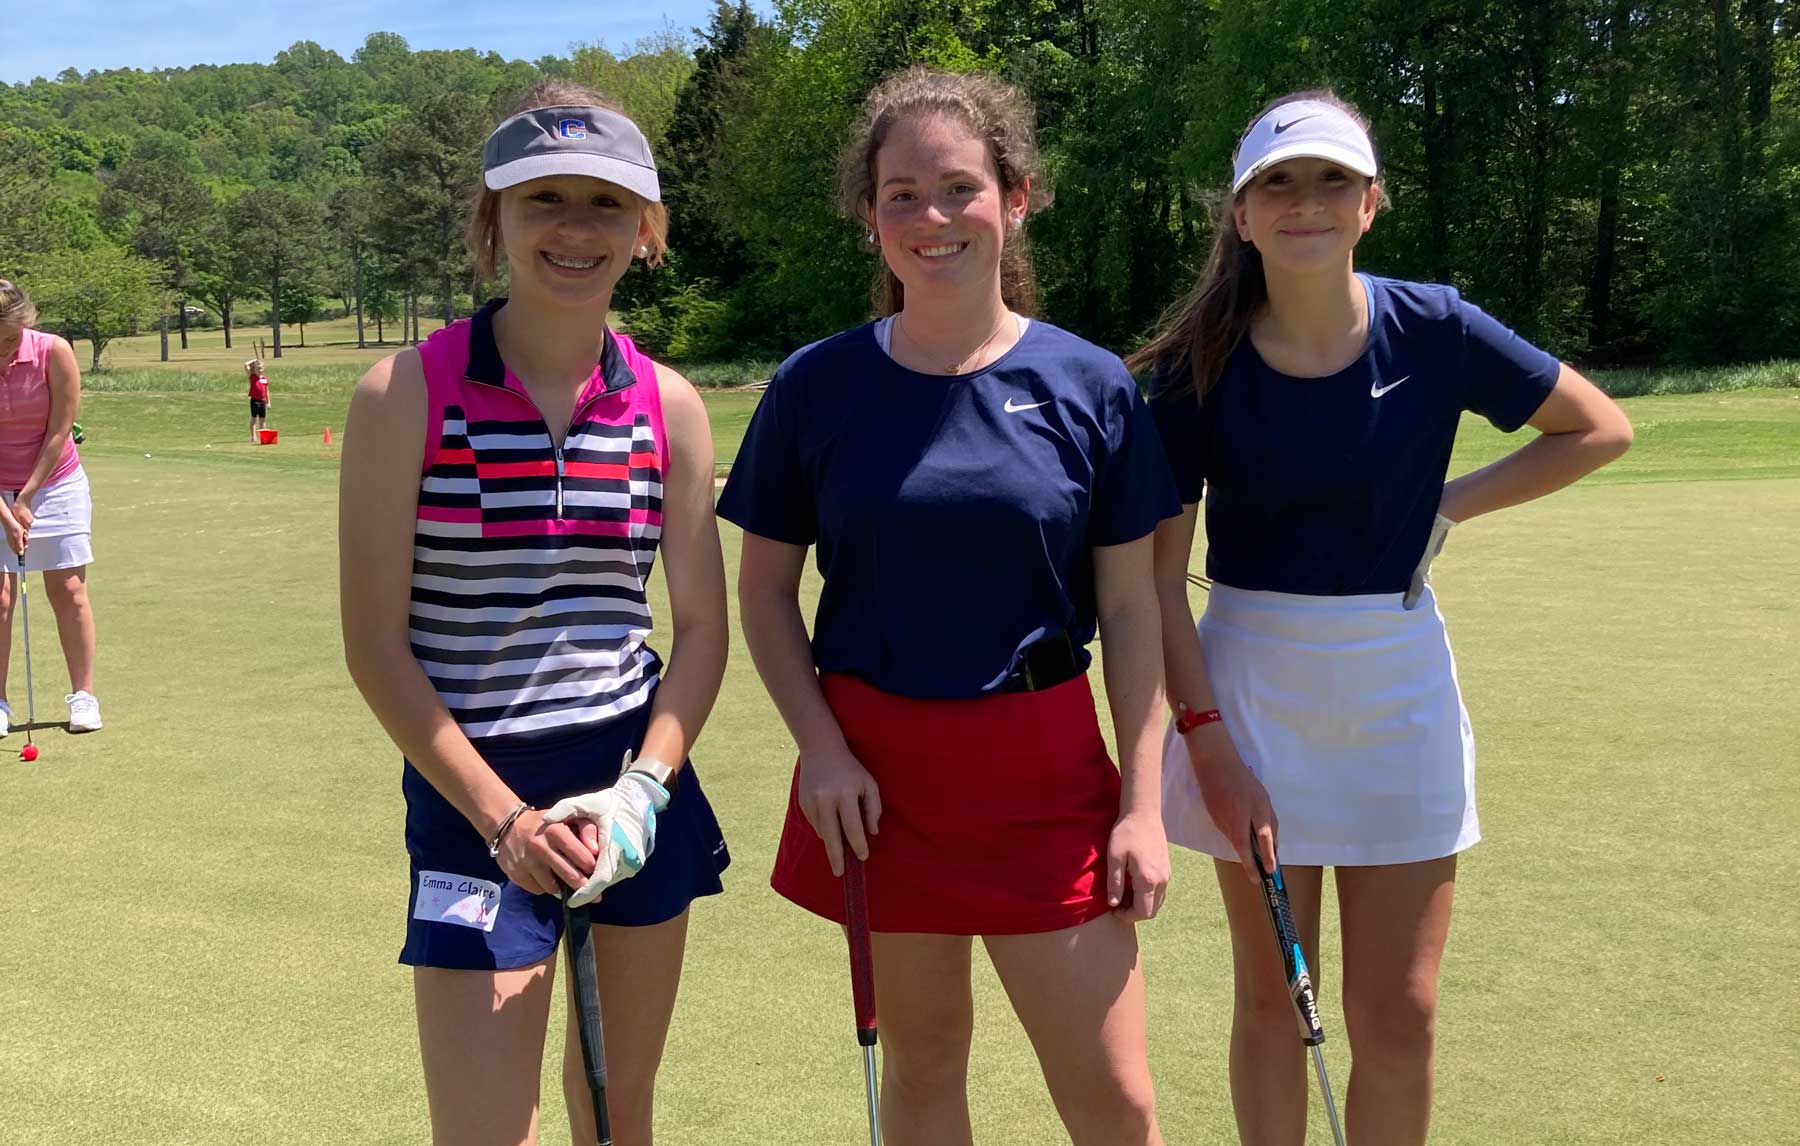 Three Girls Golf teen participants on putting green.